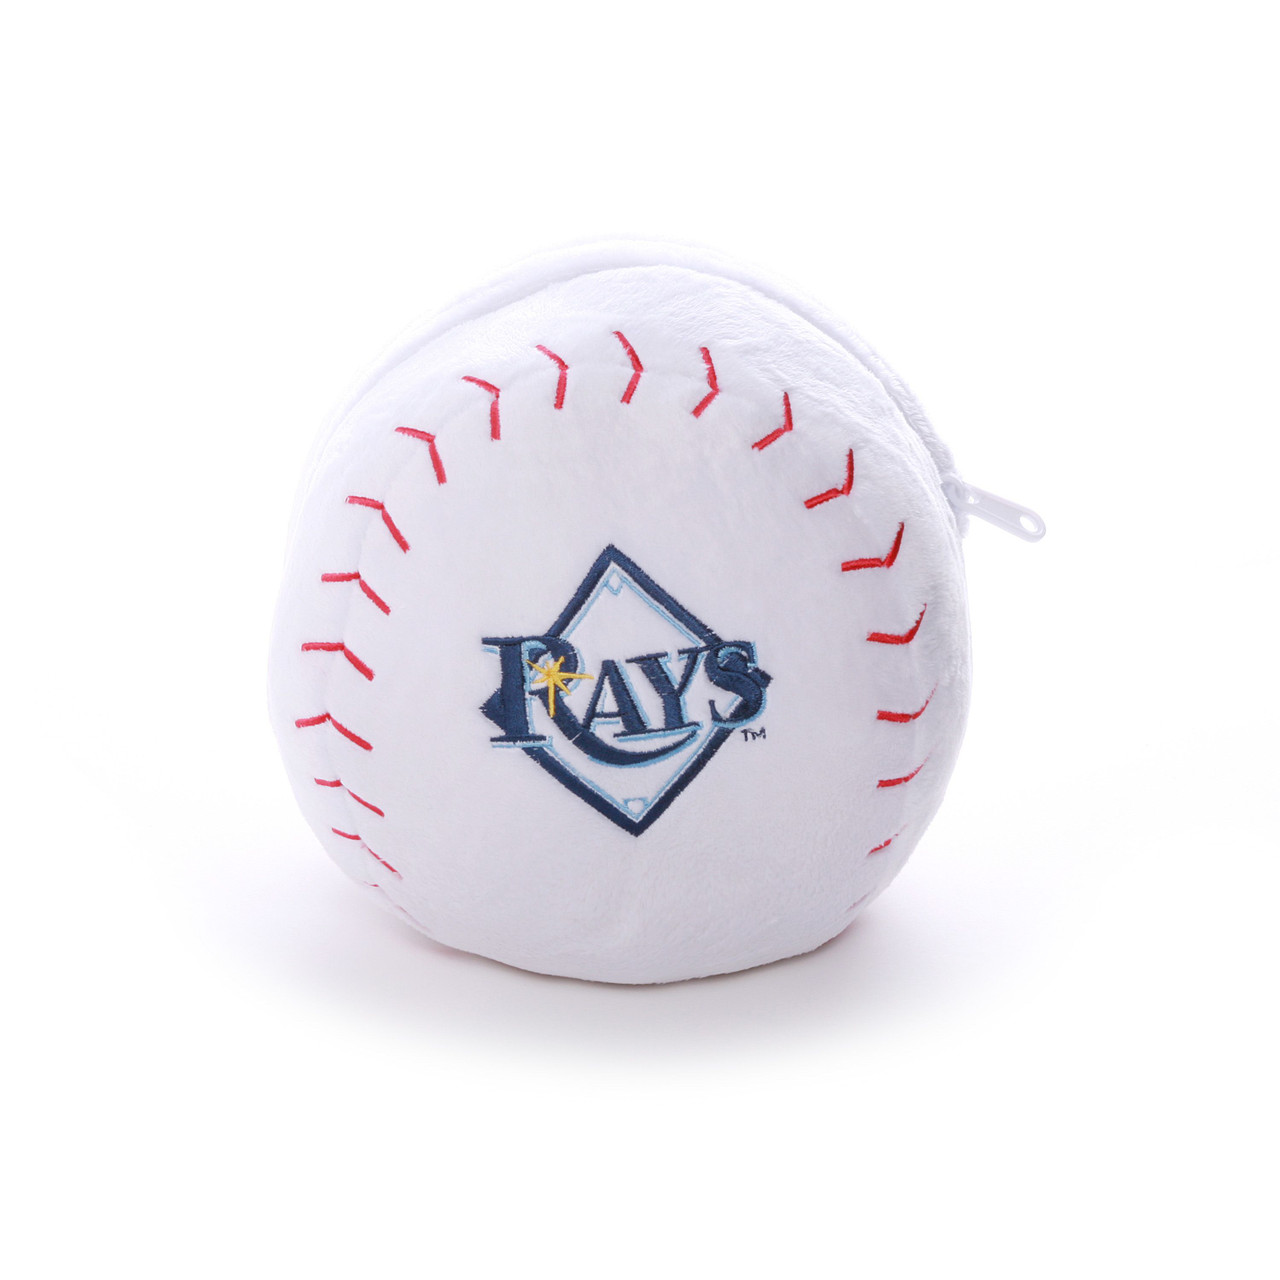 MLB Tampa Bay Rays baseball designed regulation size bowling ball